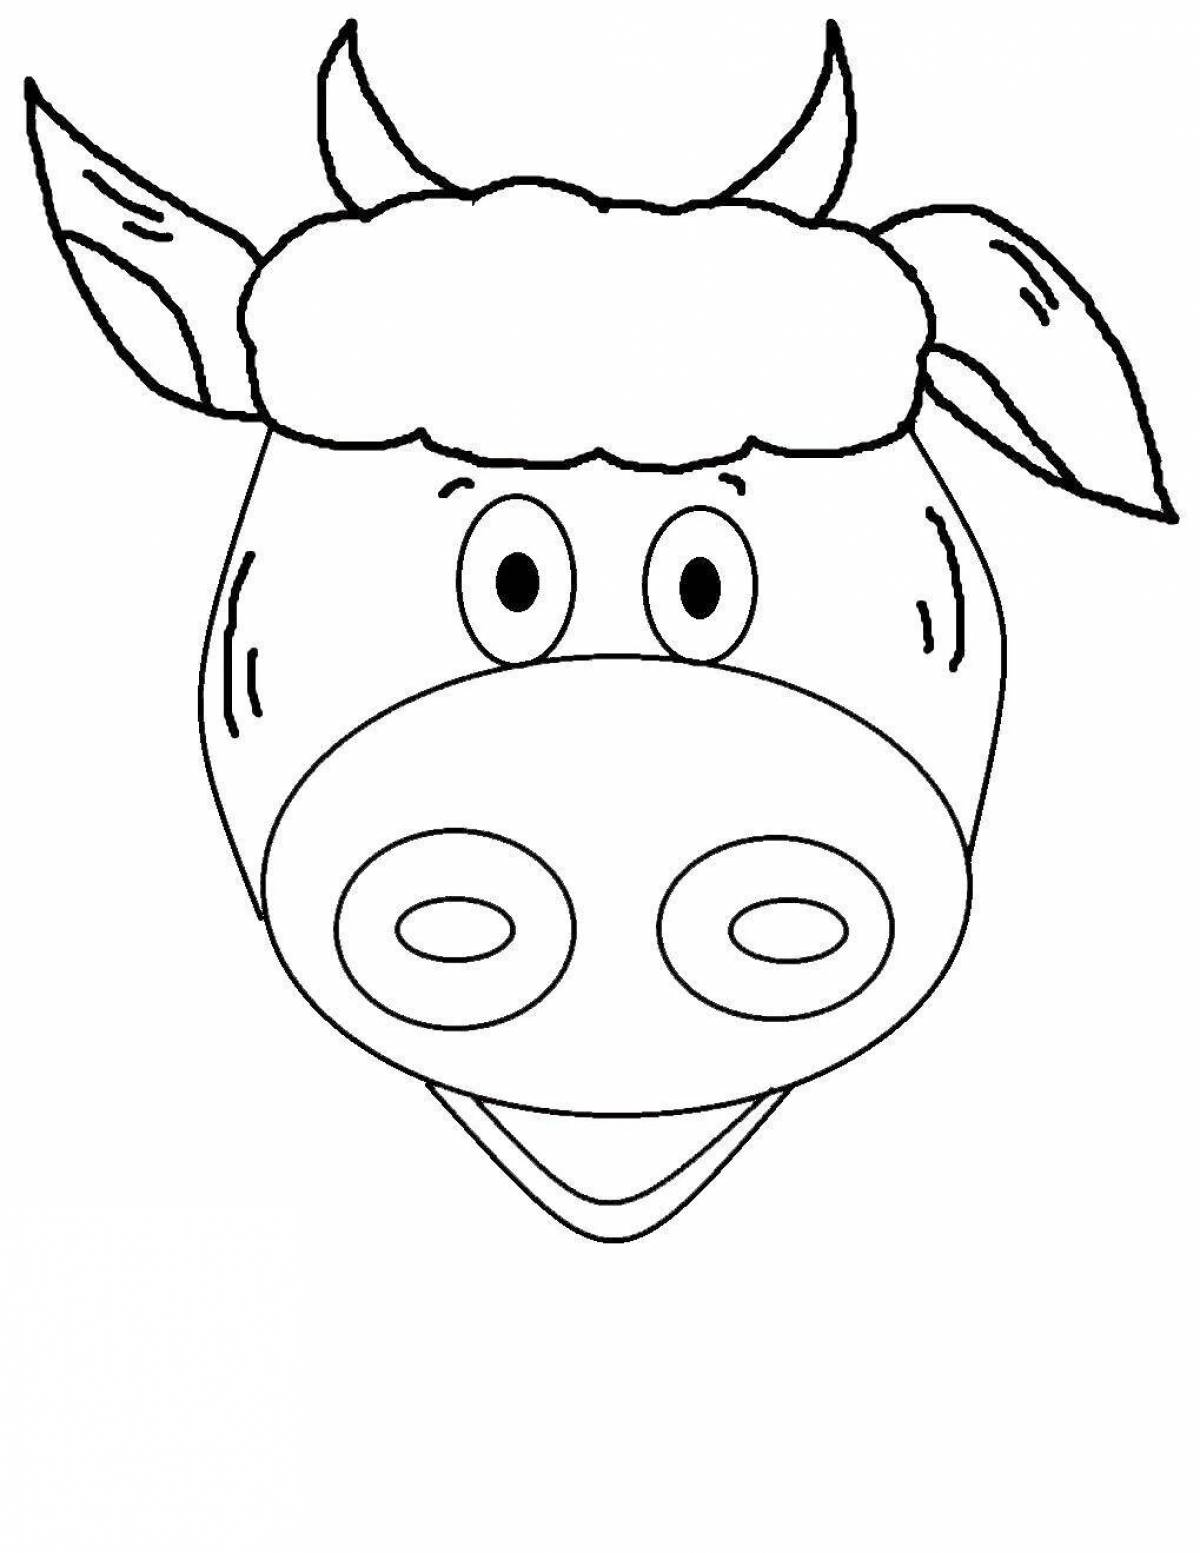 Zany cow head coloring